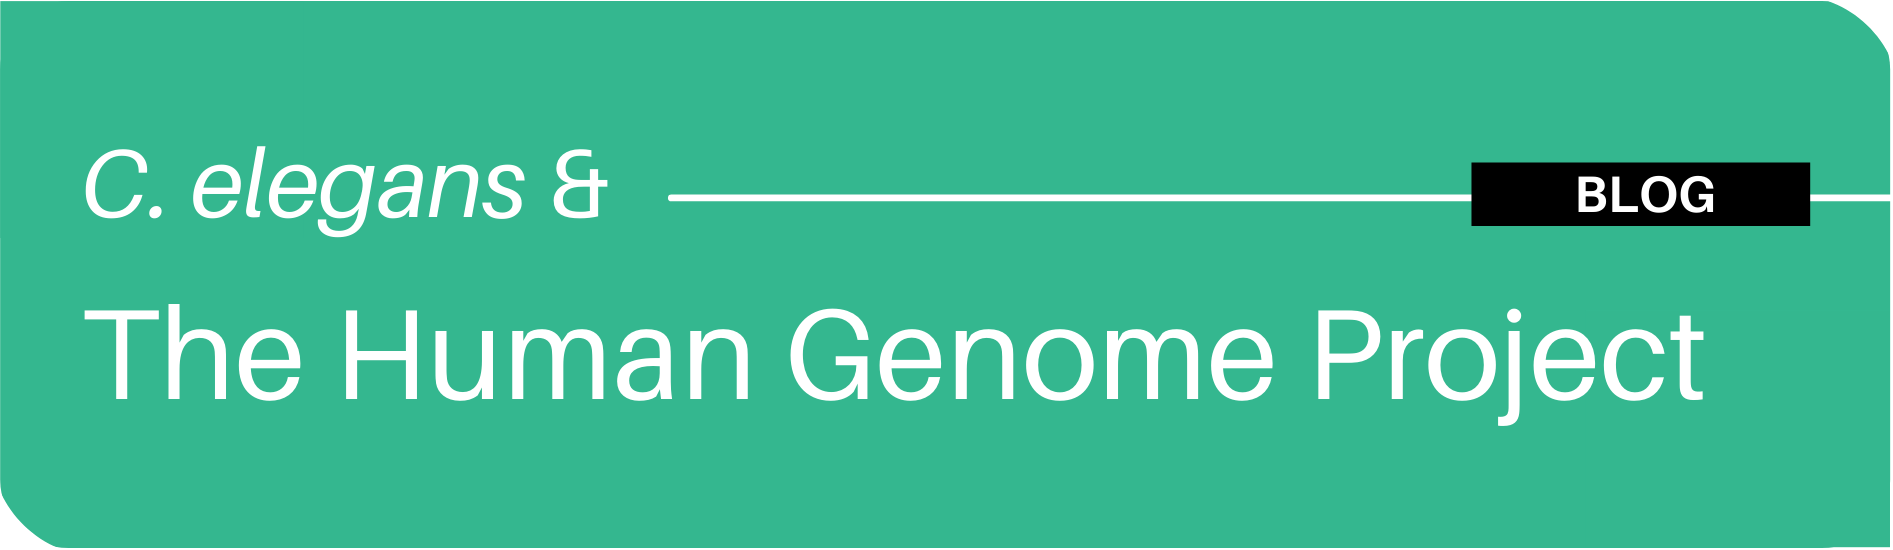 C. elegans human genome project